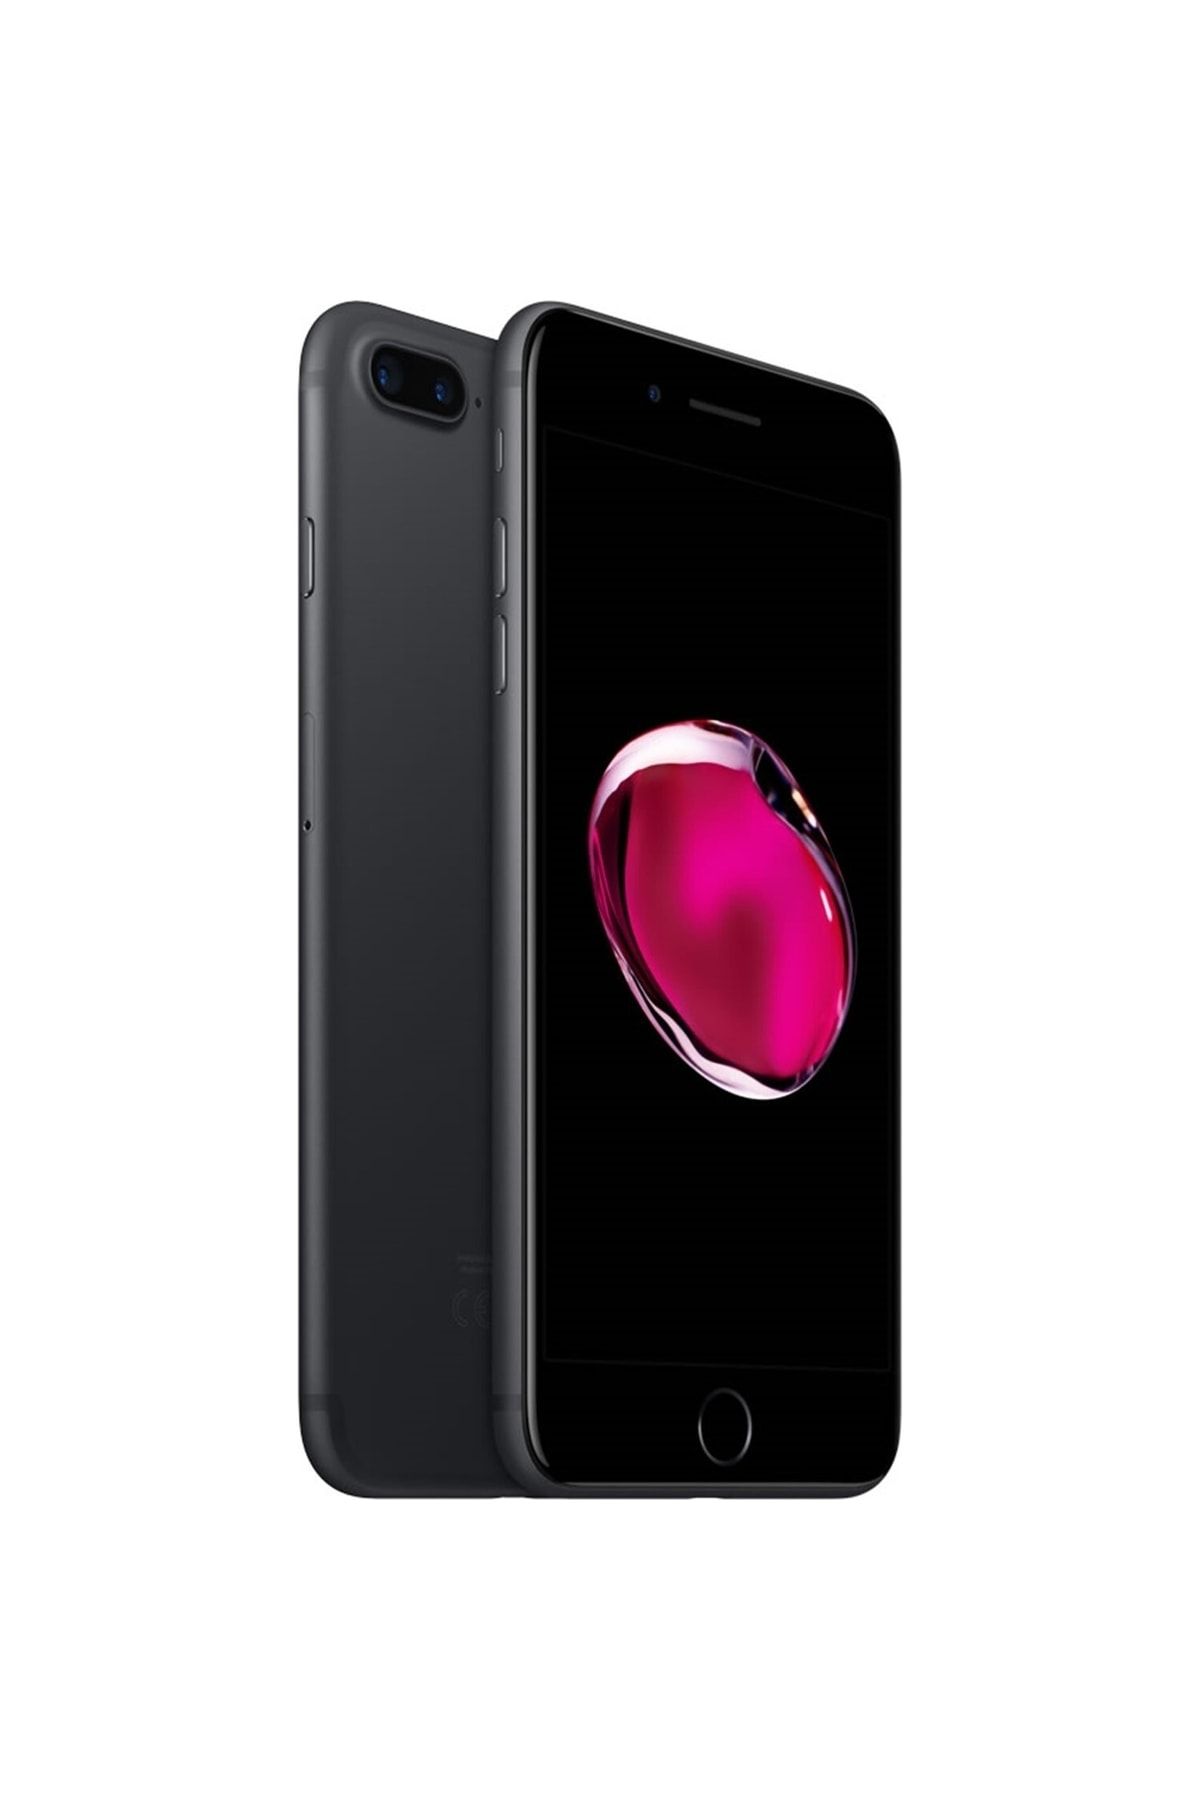 Apple Yenilenmiş Iphone 7 Plus 32 Gb Siyah Cep Telefonu (12 AY GARANTİLİ)